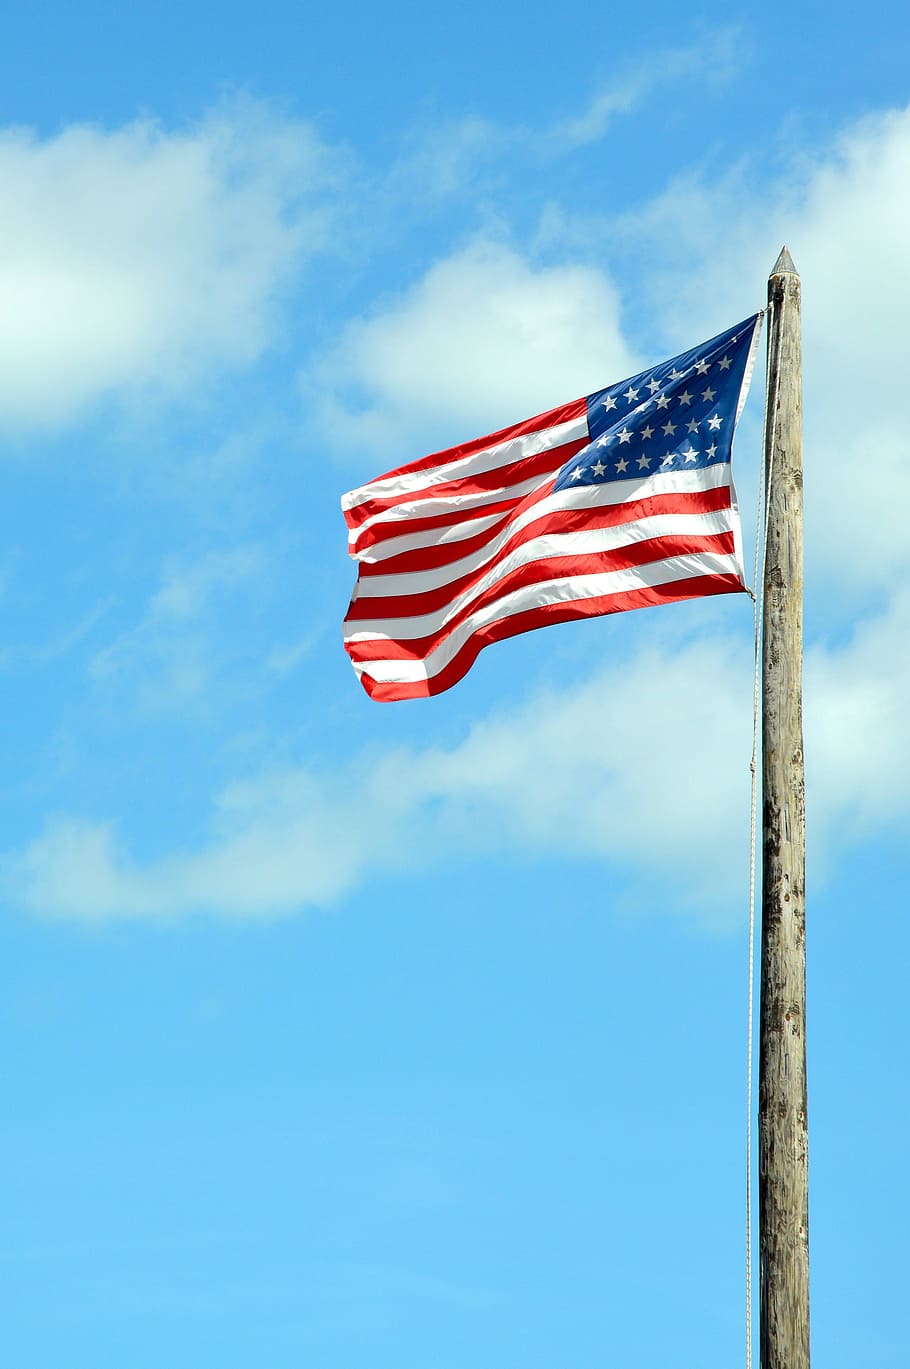 United States of America Flag iPhone Wallpaper by Robert Padbury on Dribbble